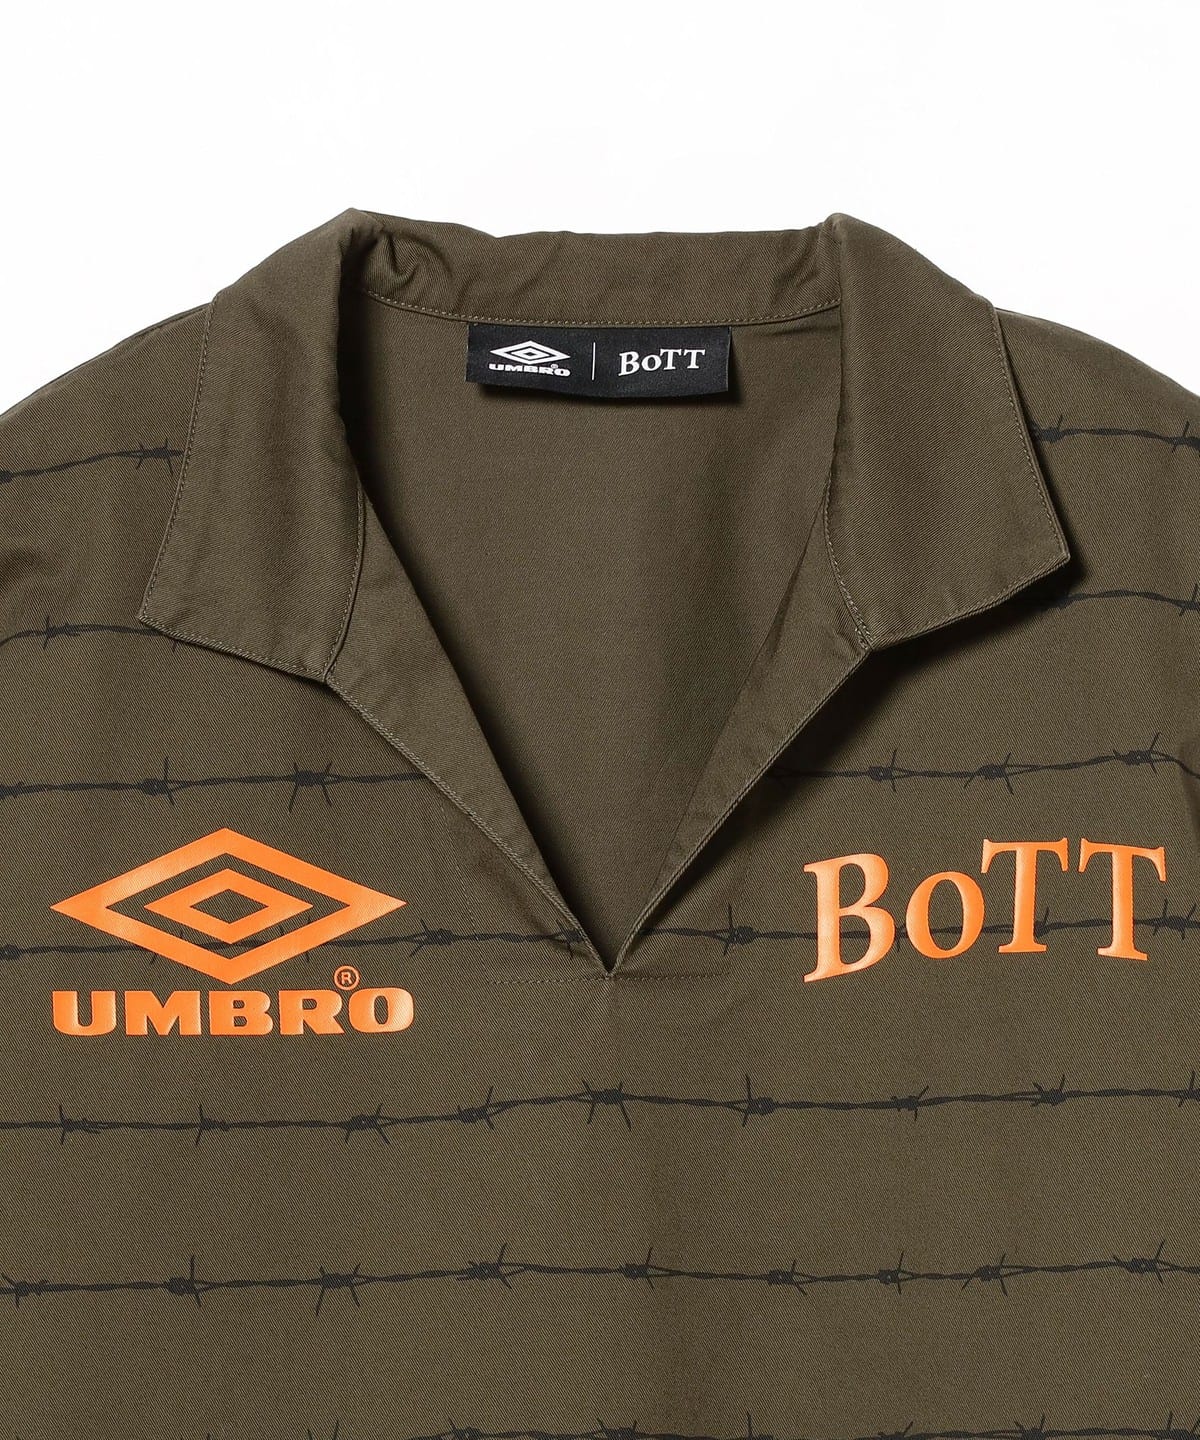 UMBRO  BoTT  BEAMS T Pullover Shirt Mサイズ購入したいです